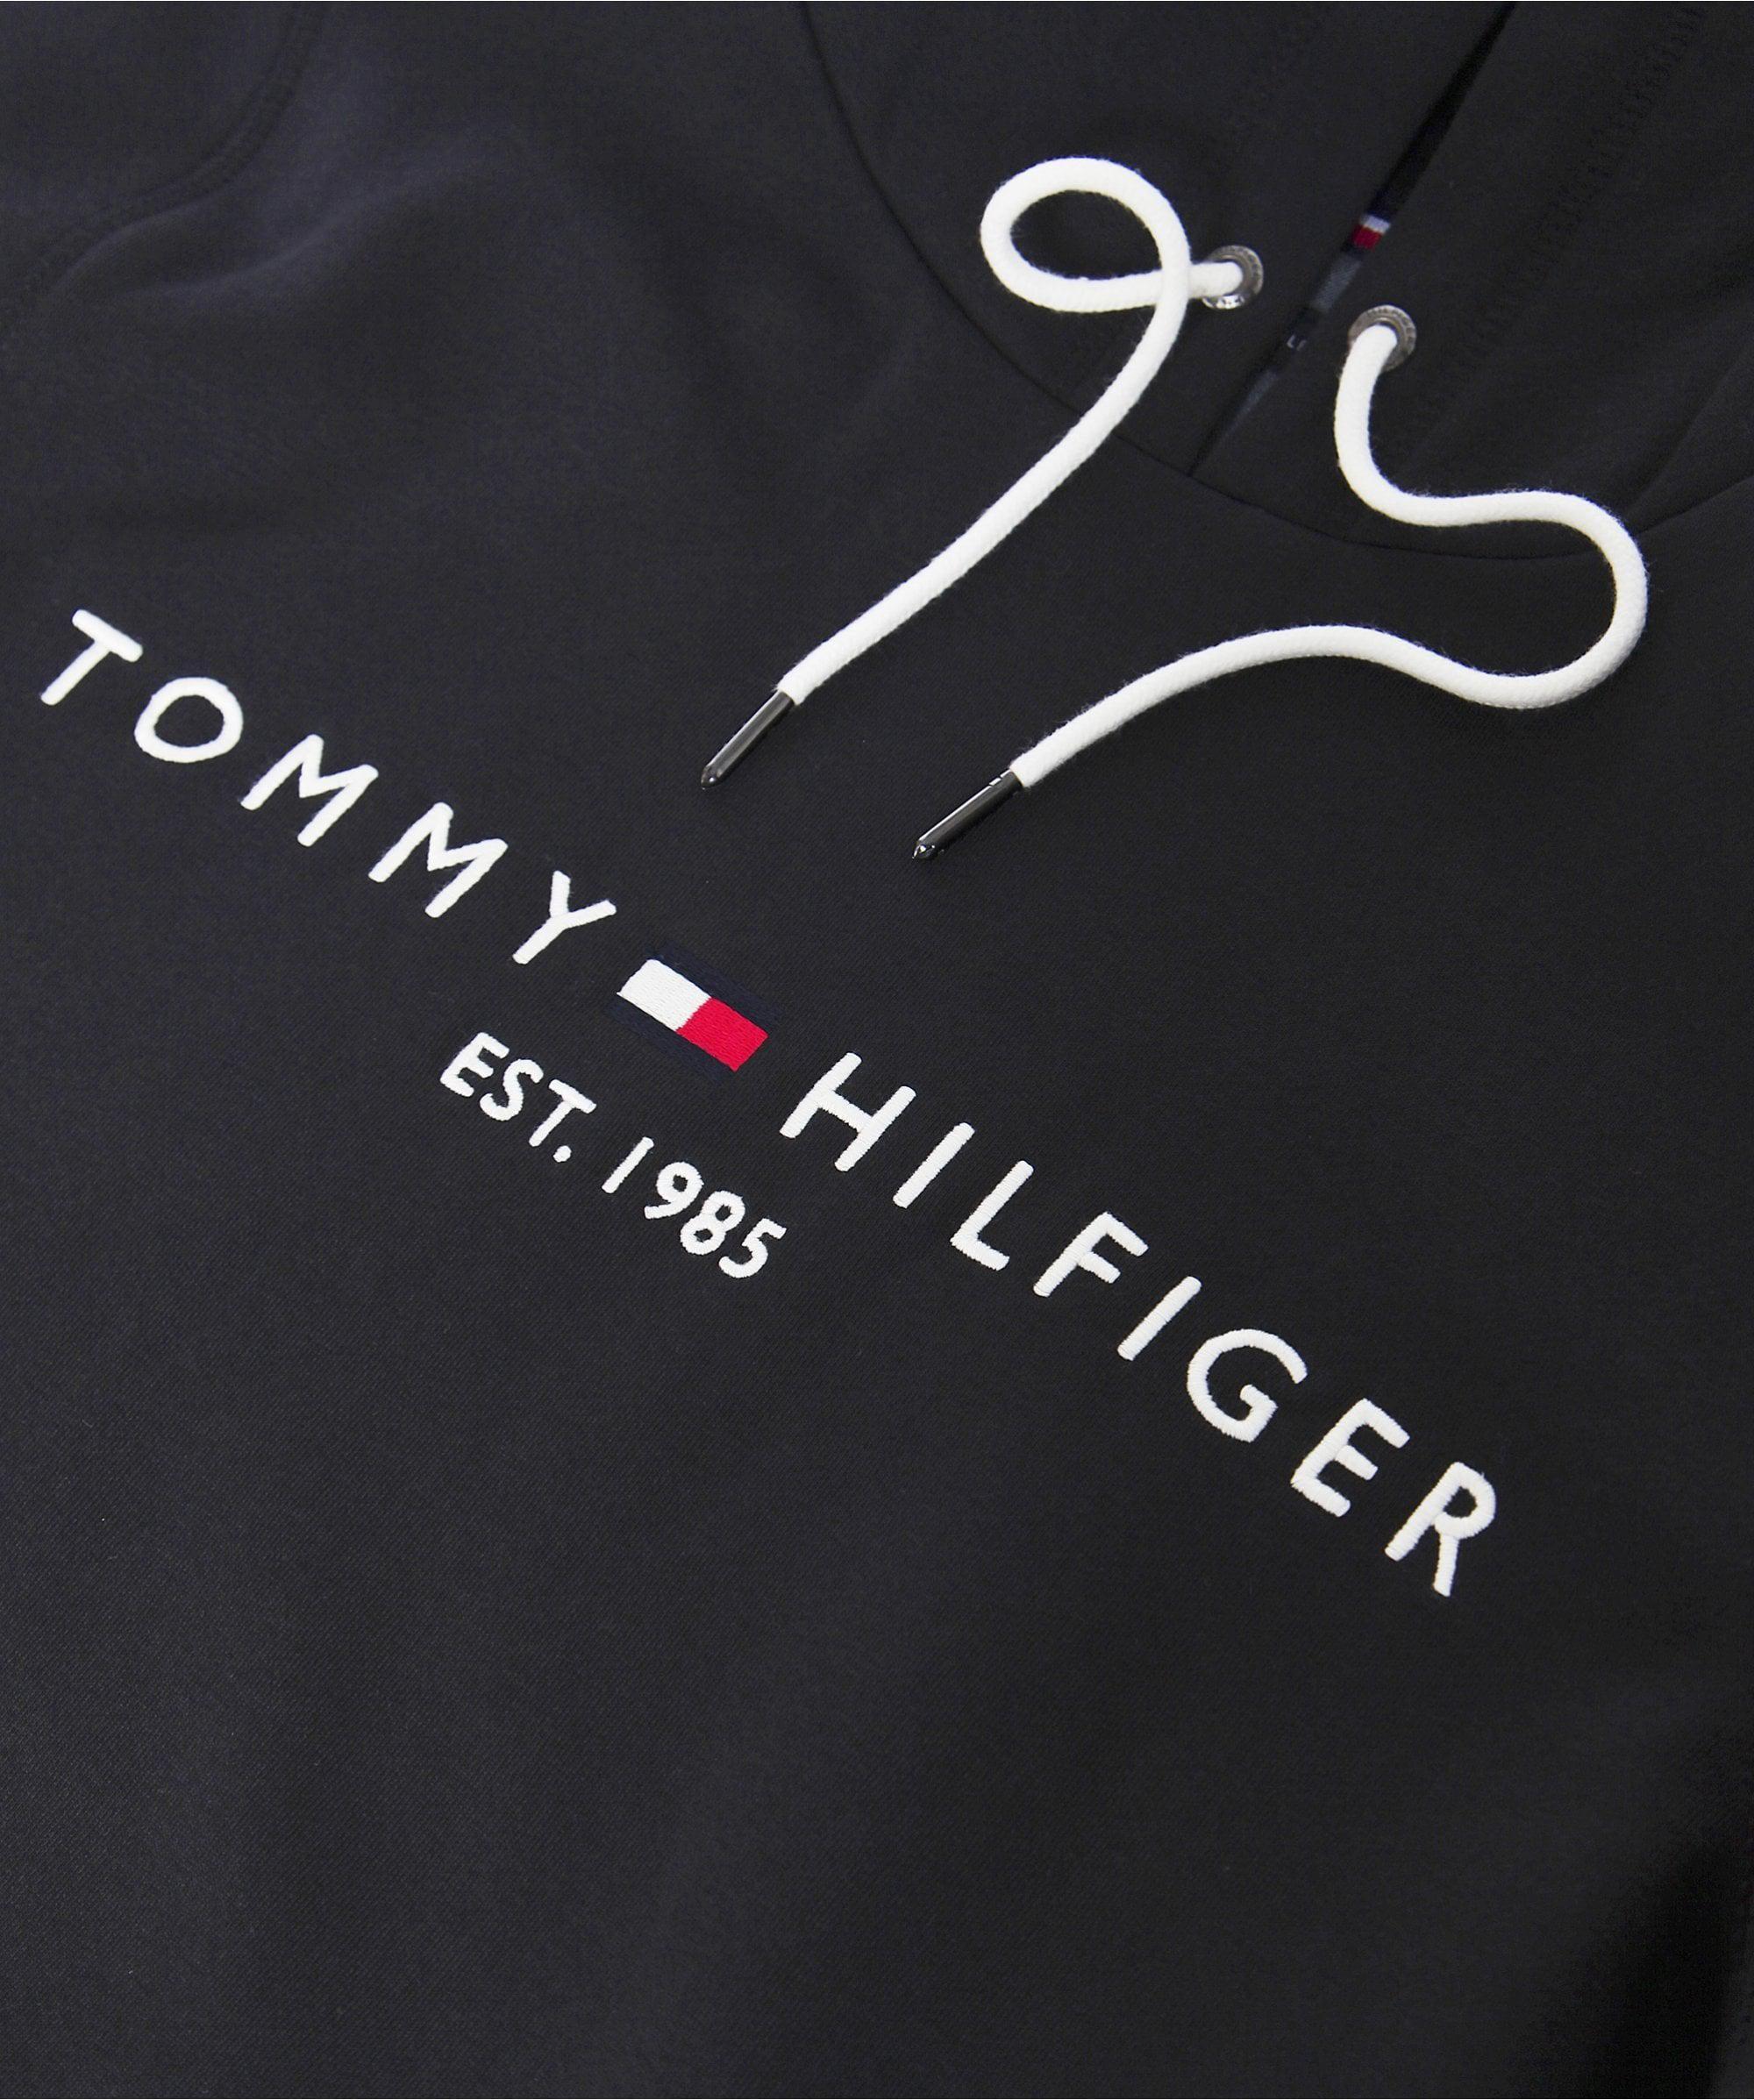 Tommy Hilfiger Black Logo - LogoDix